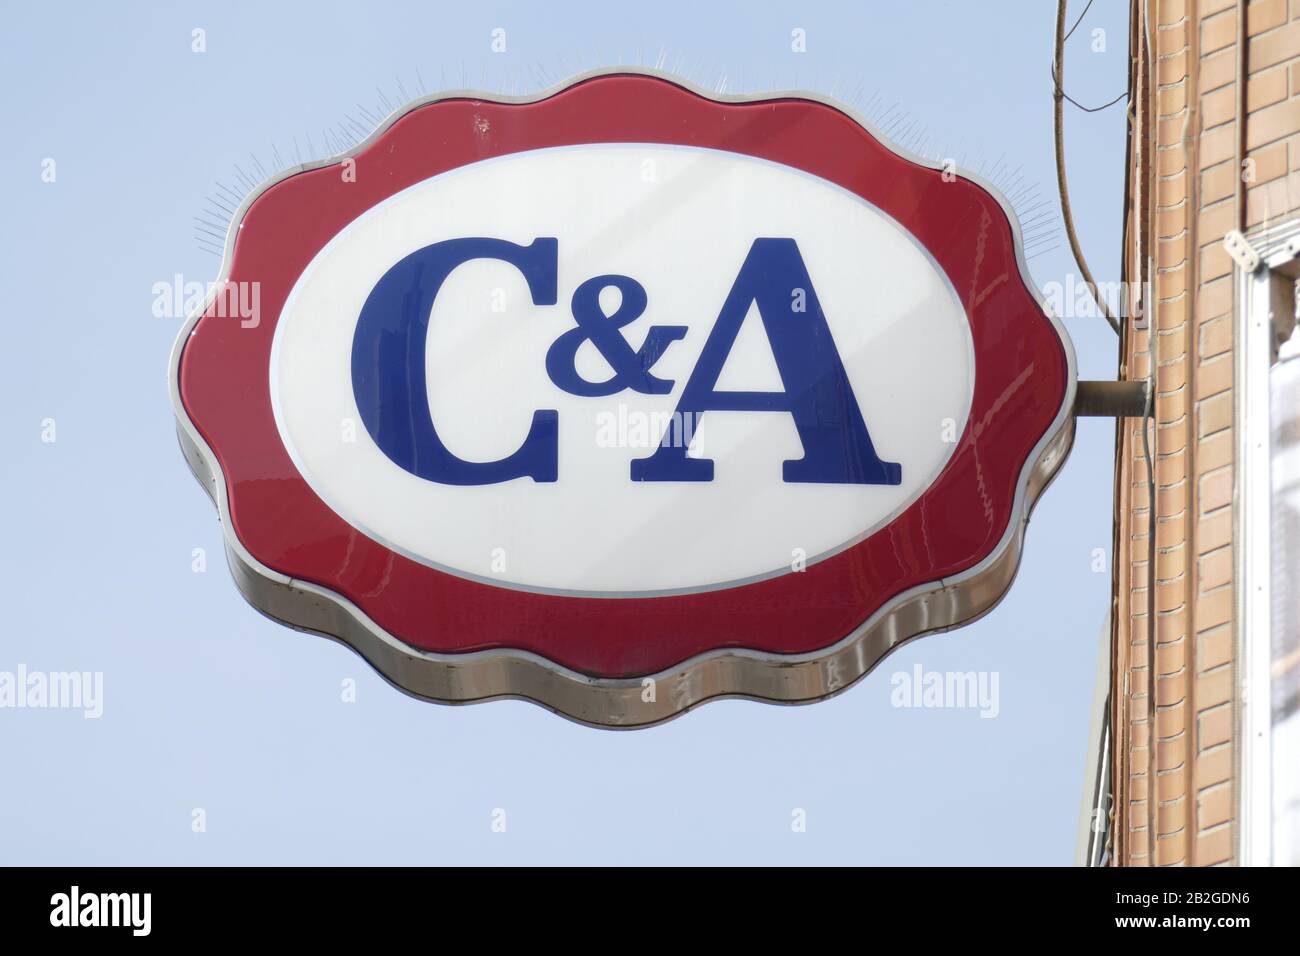 C&A logo, Germany, Europe Stock Photo